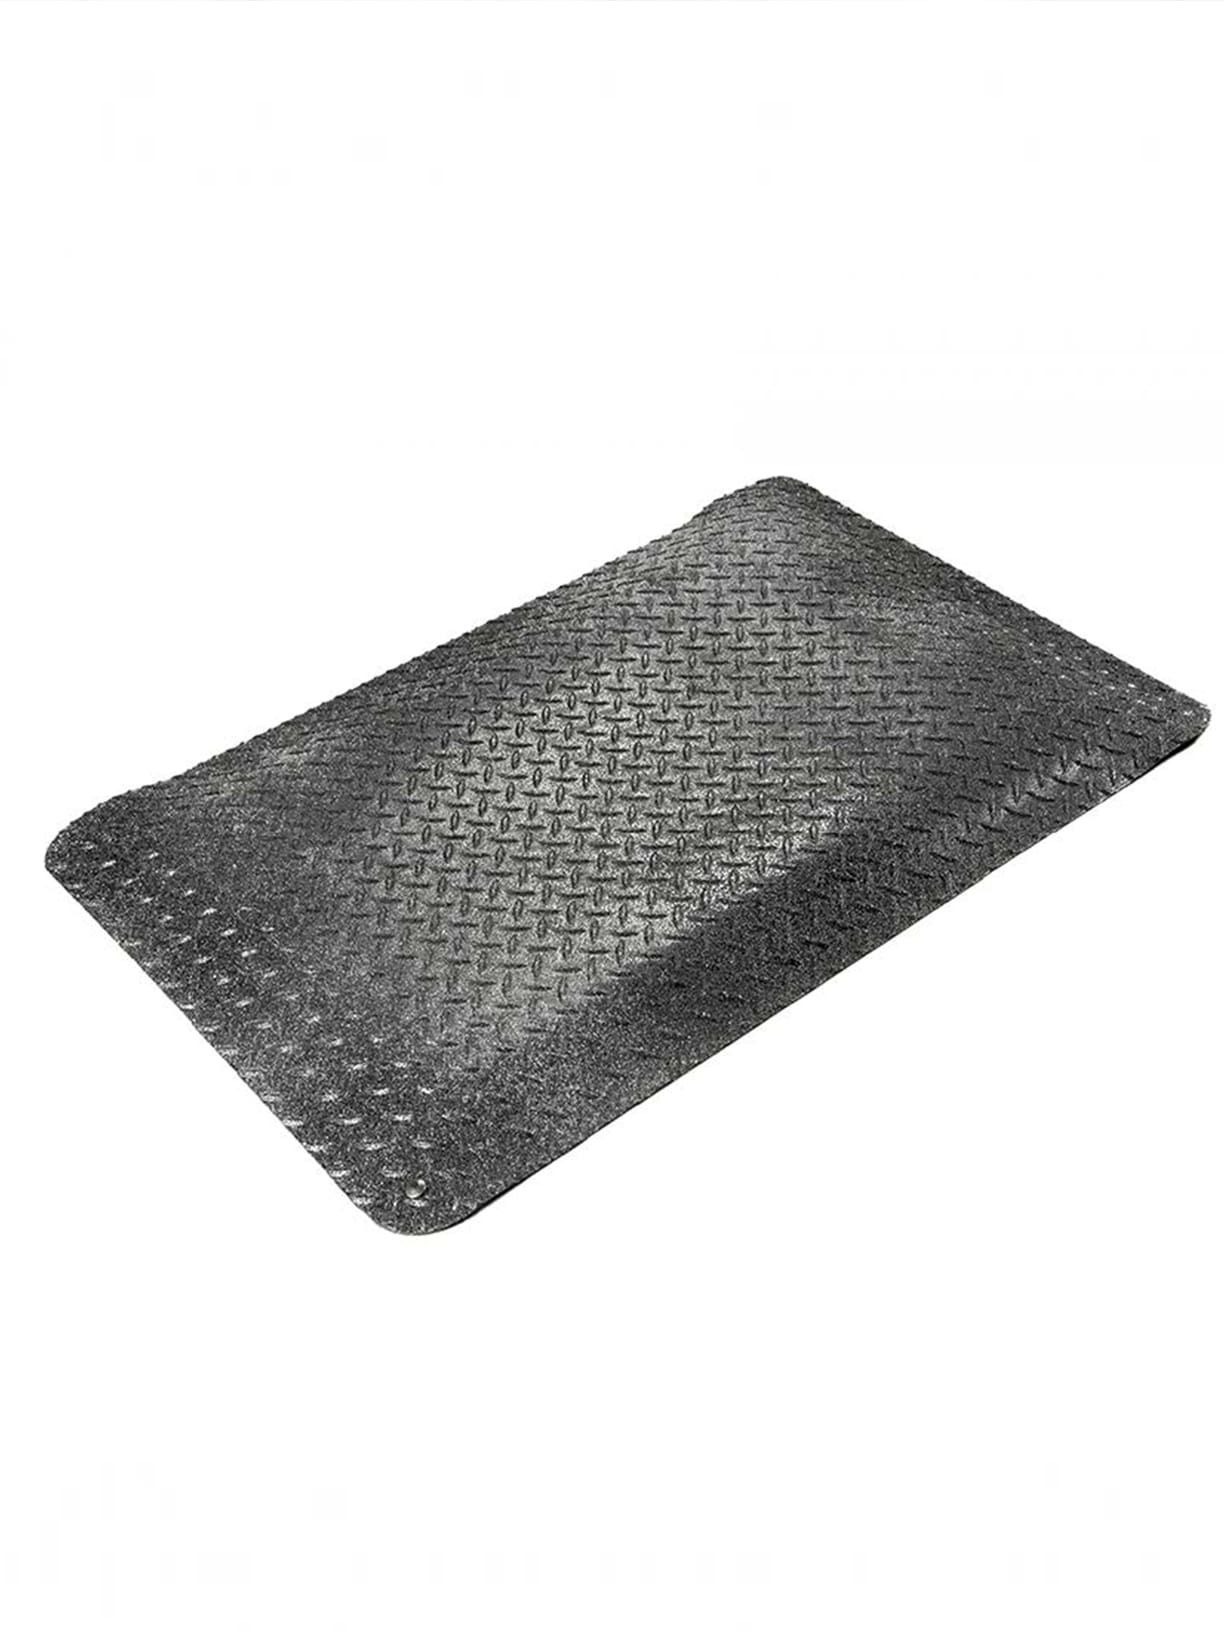 ErgoTech Products: Tehnoguma - Non slip Floor mats 3